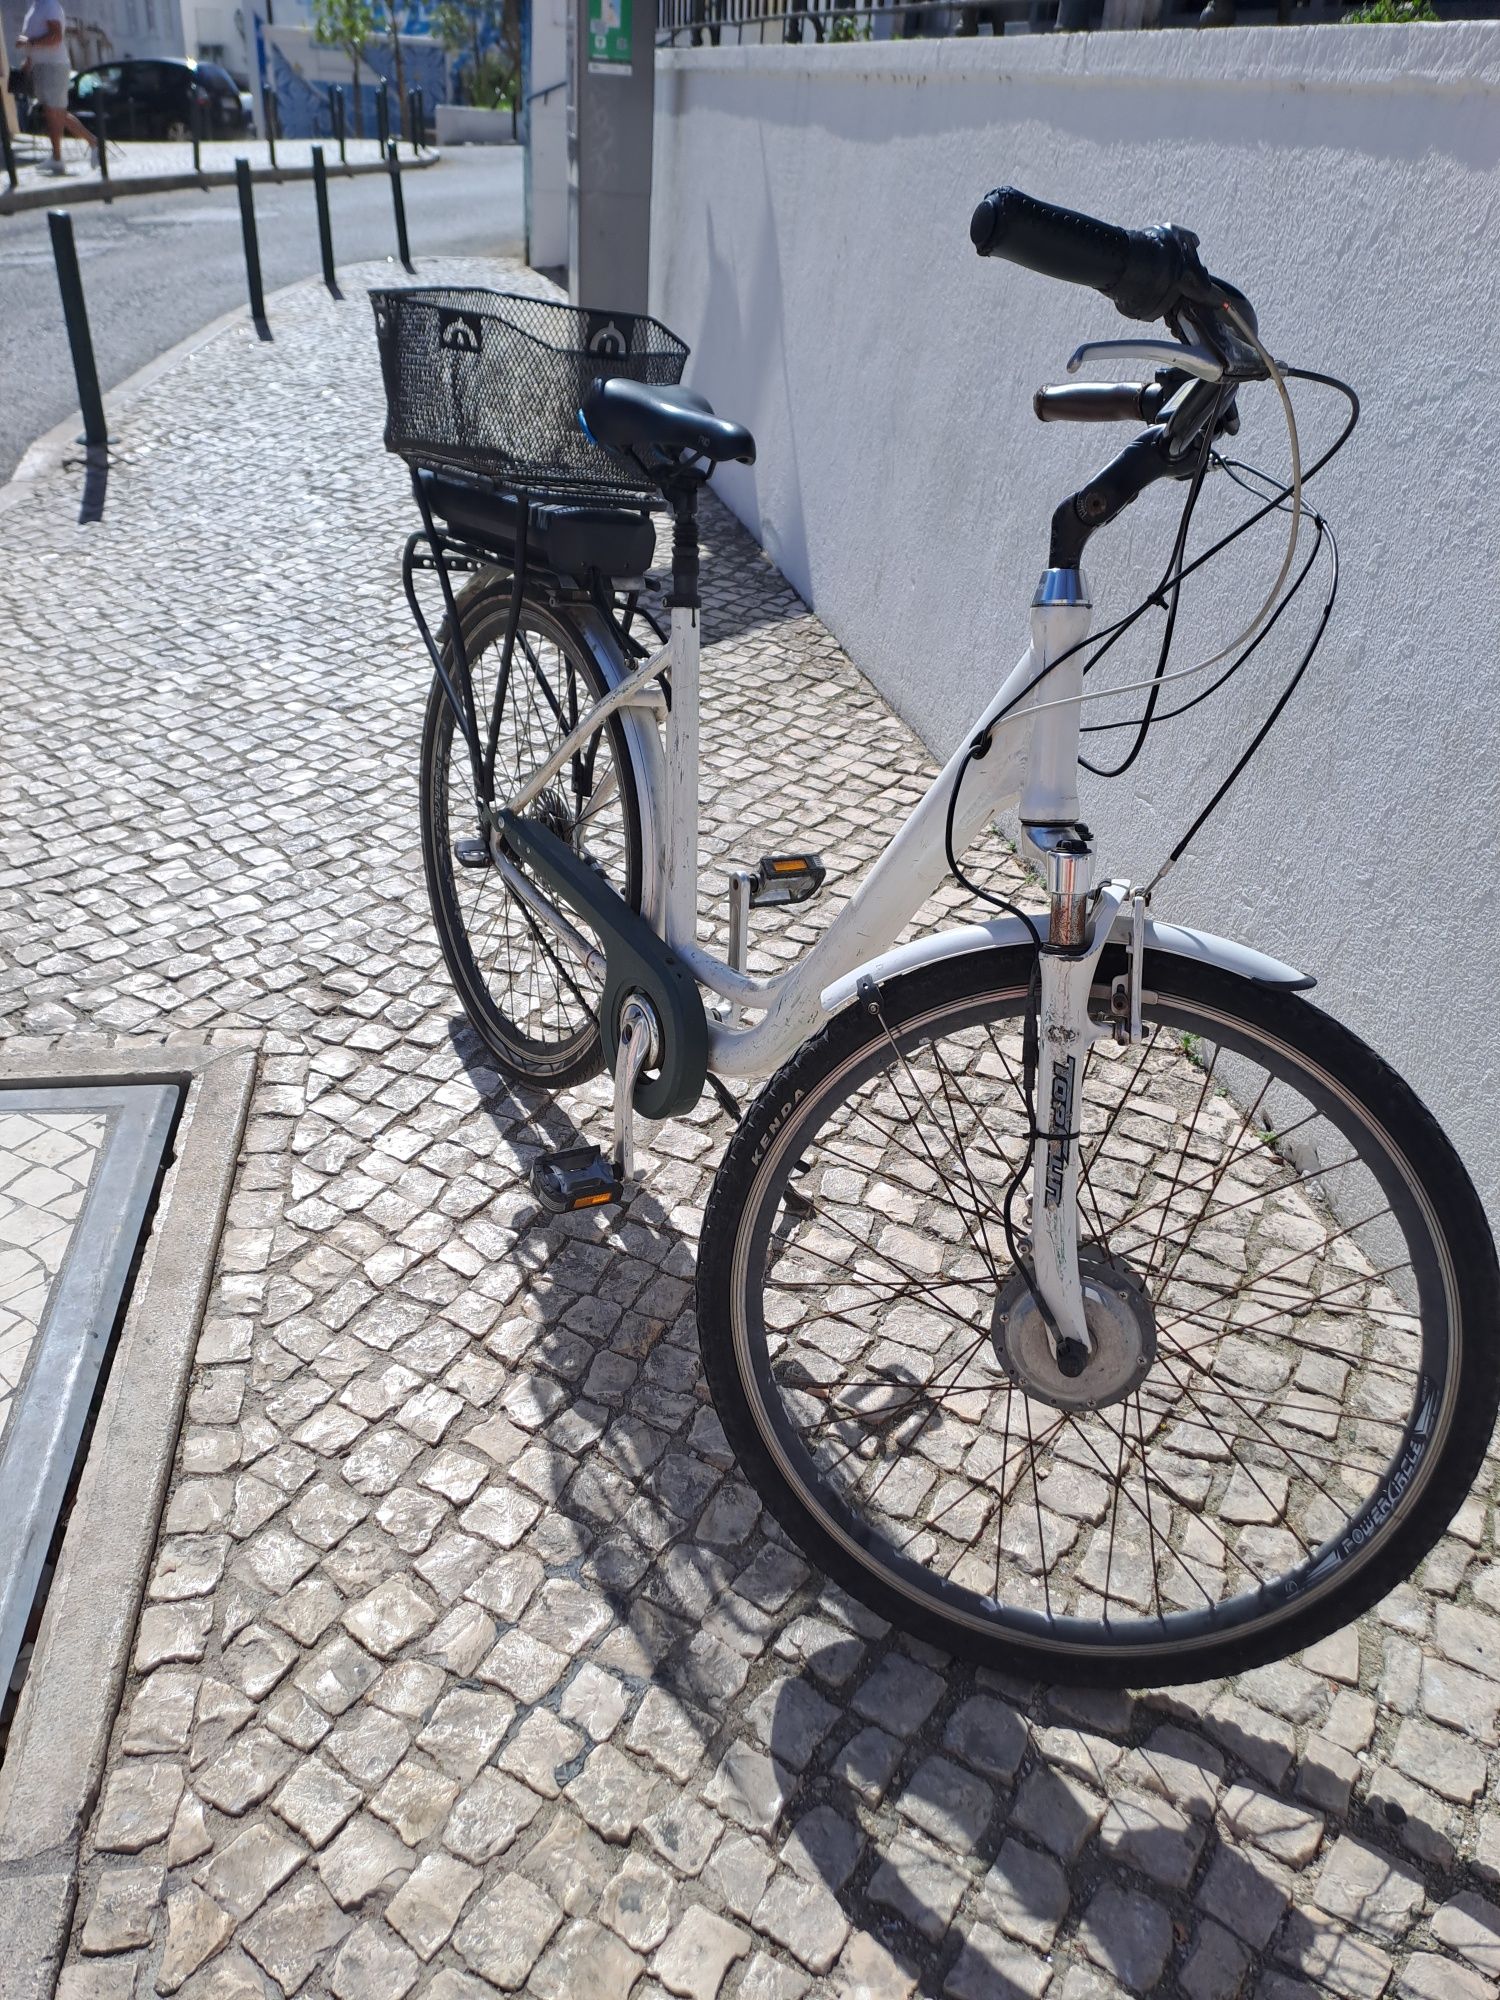 Bicicleta eletrica 36v